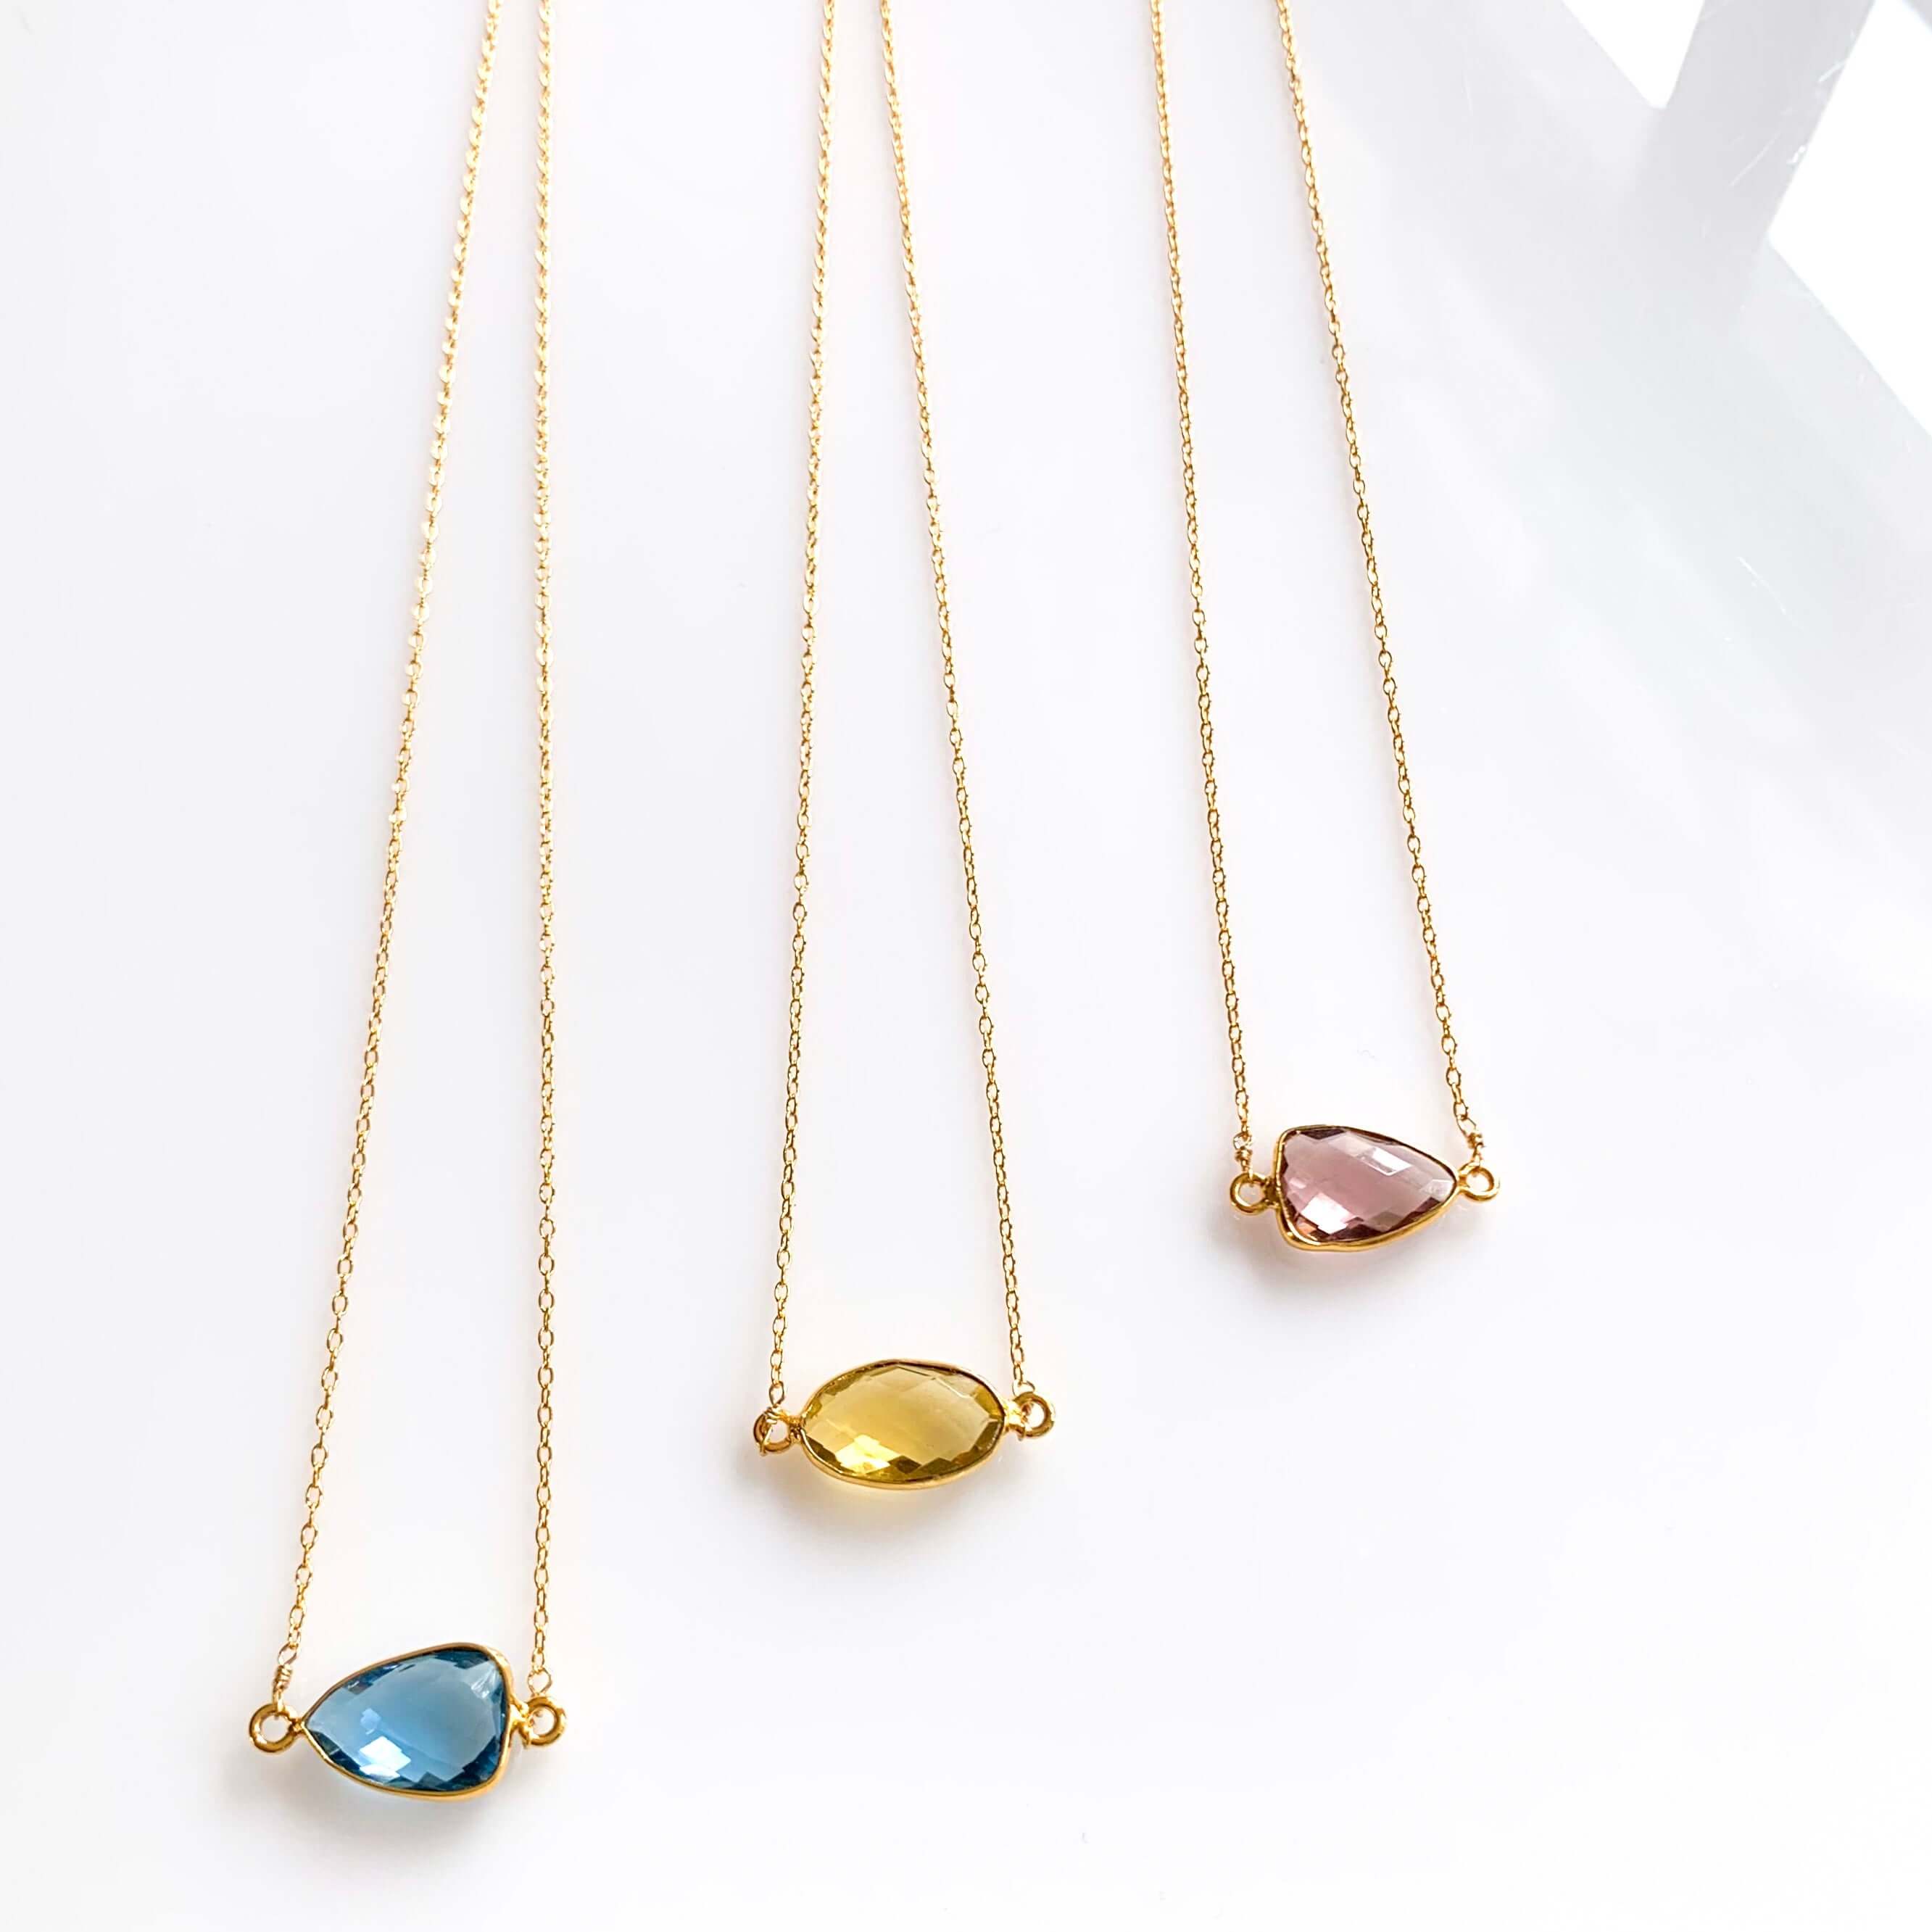 Minimalist Gold Necklaces with Bezel-Set Stones